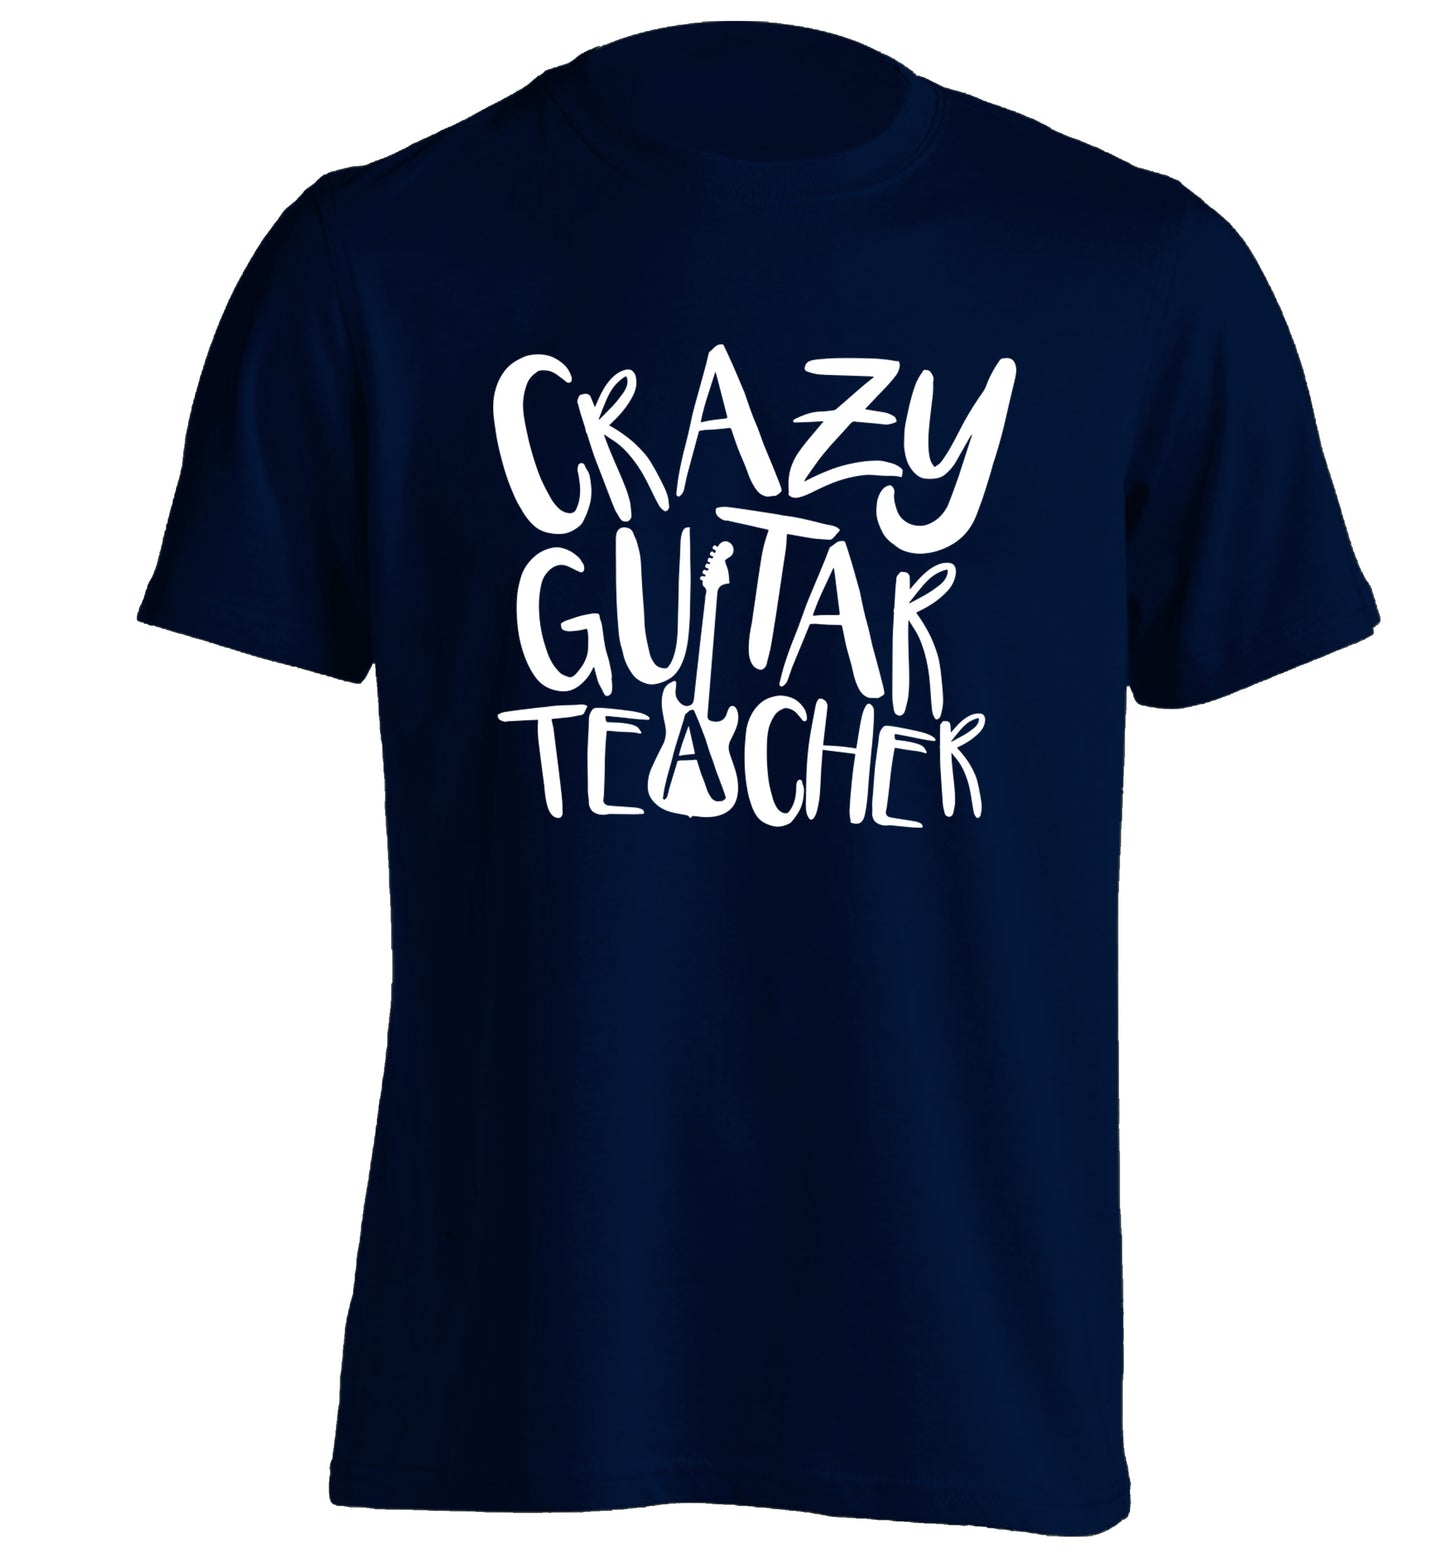 Crazy guitar teacher adults unisex navy Tshirt 2XL